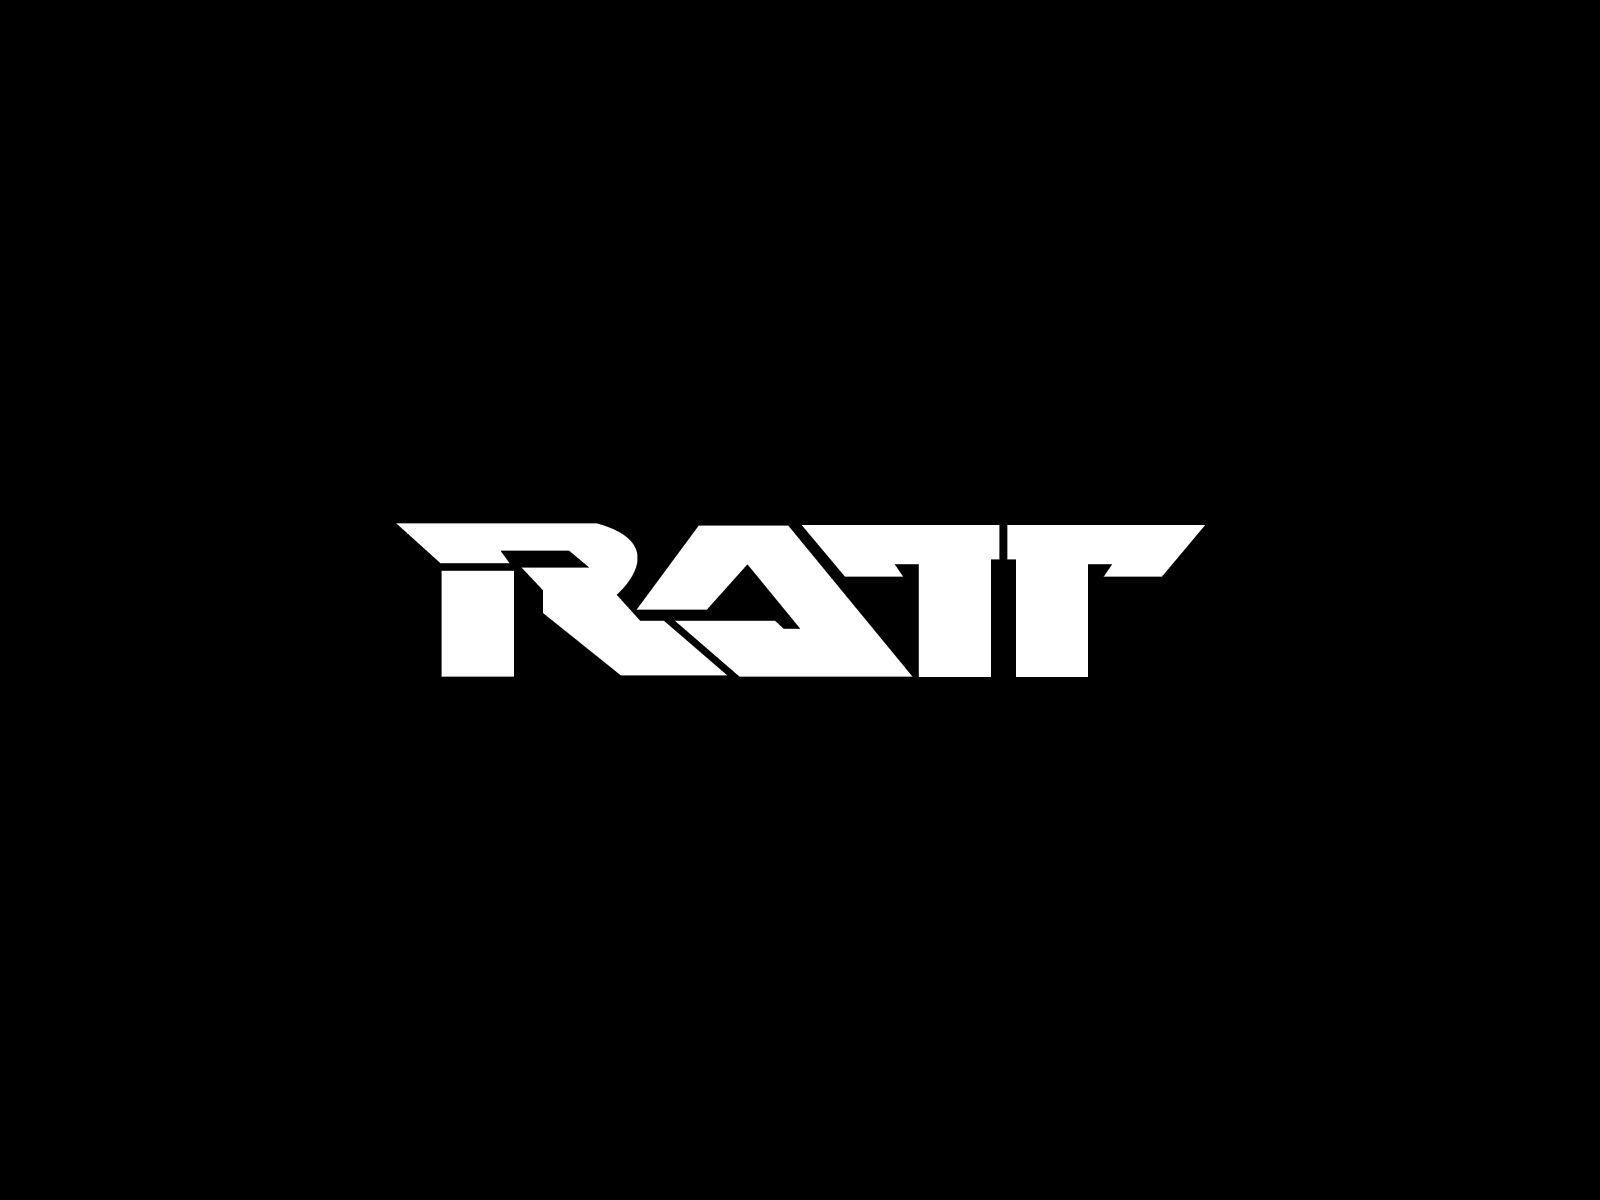 Ratt Logo - Ratt band logo | Band Logos | Band logos, Band, Music